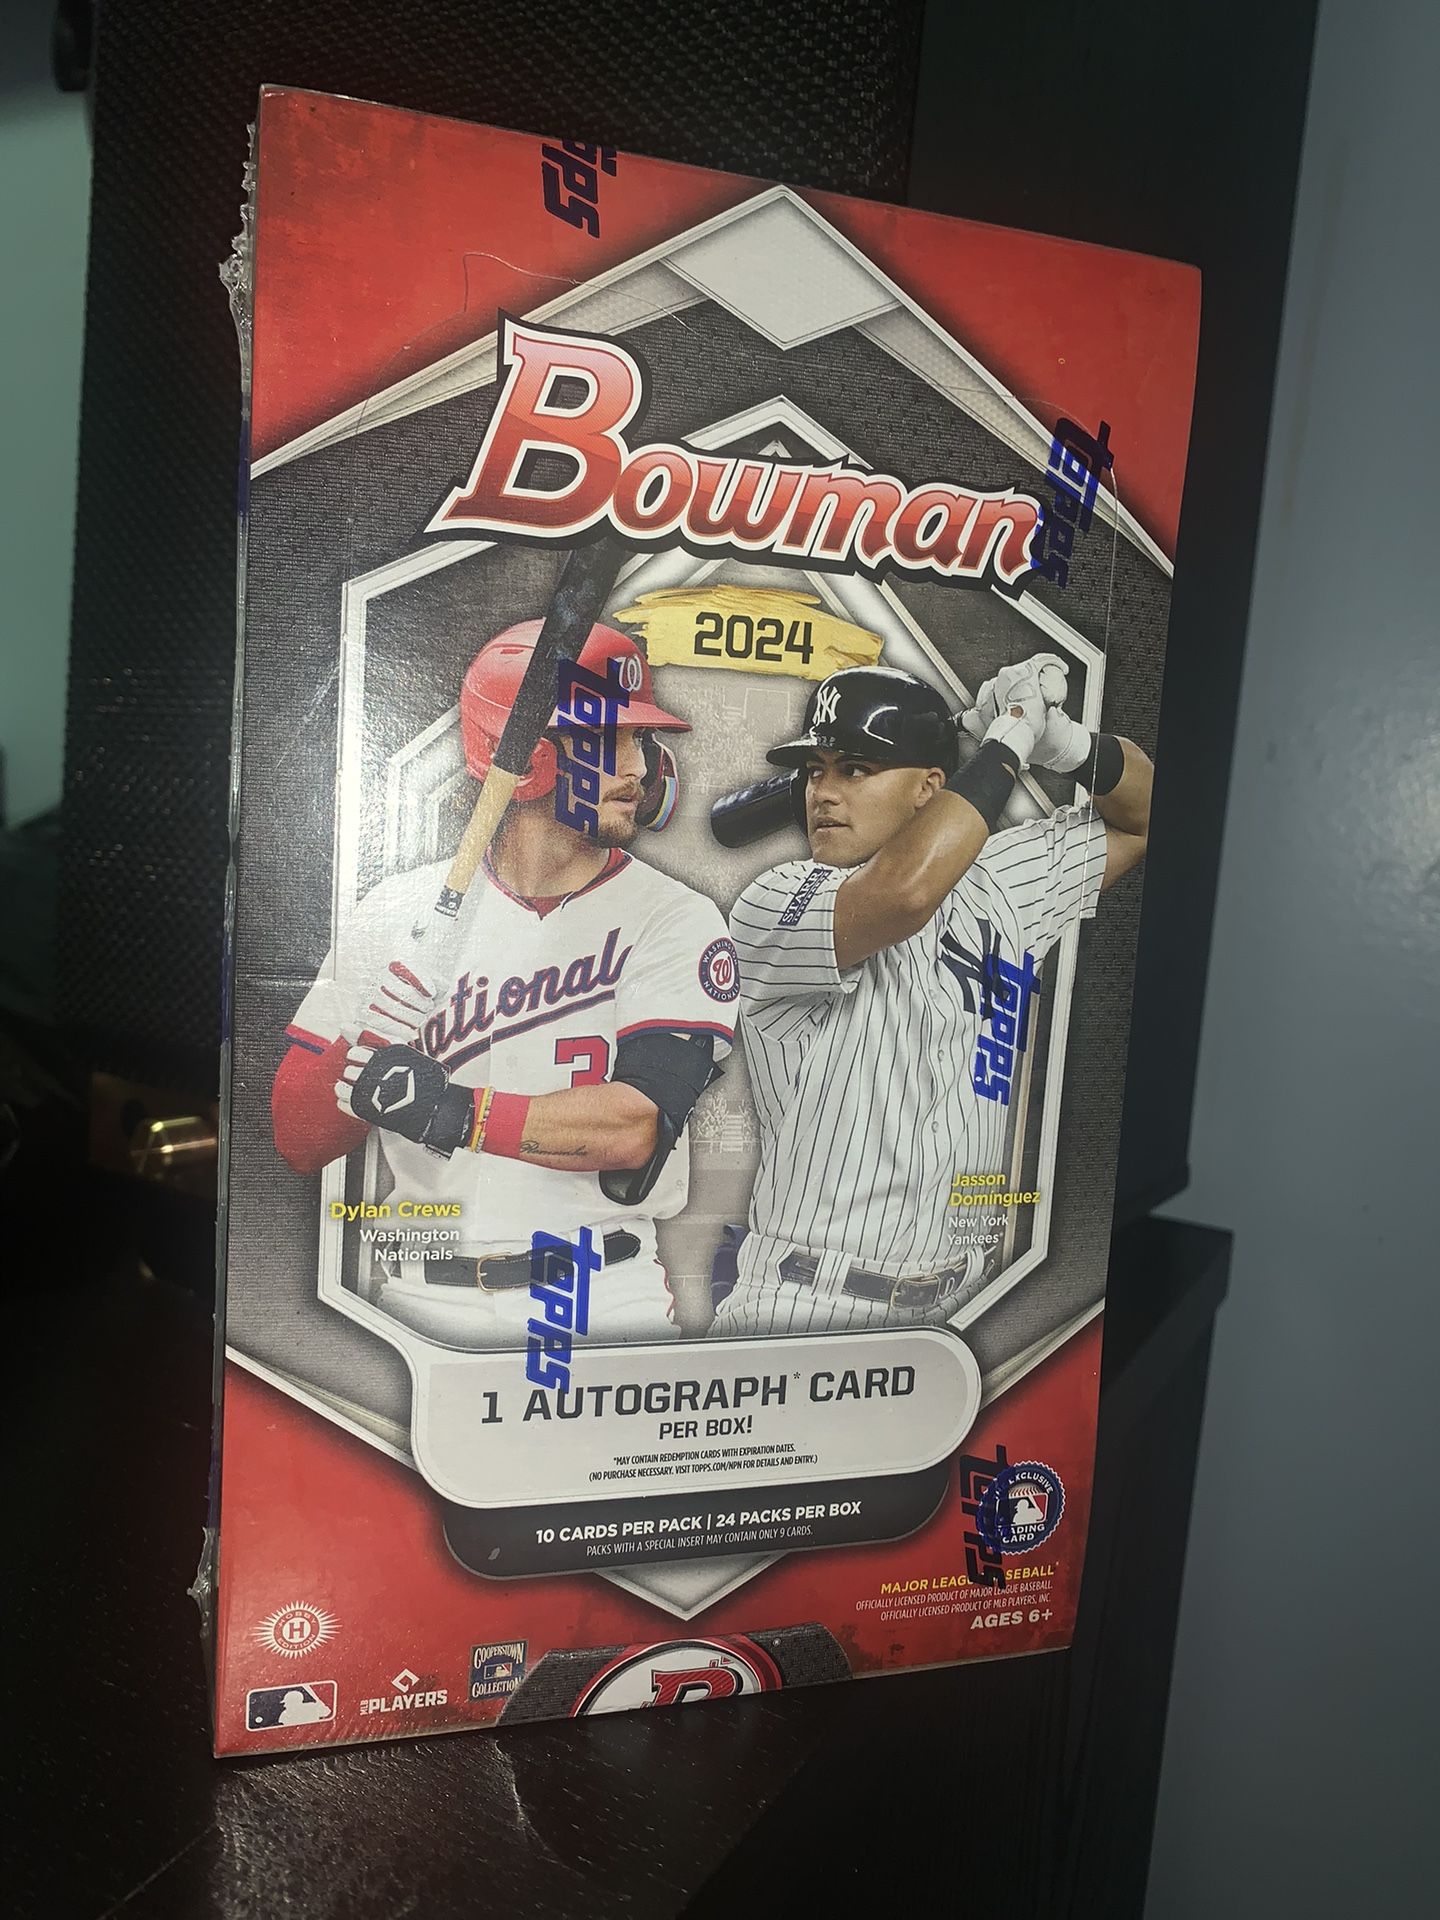 Bowman Cards